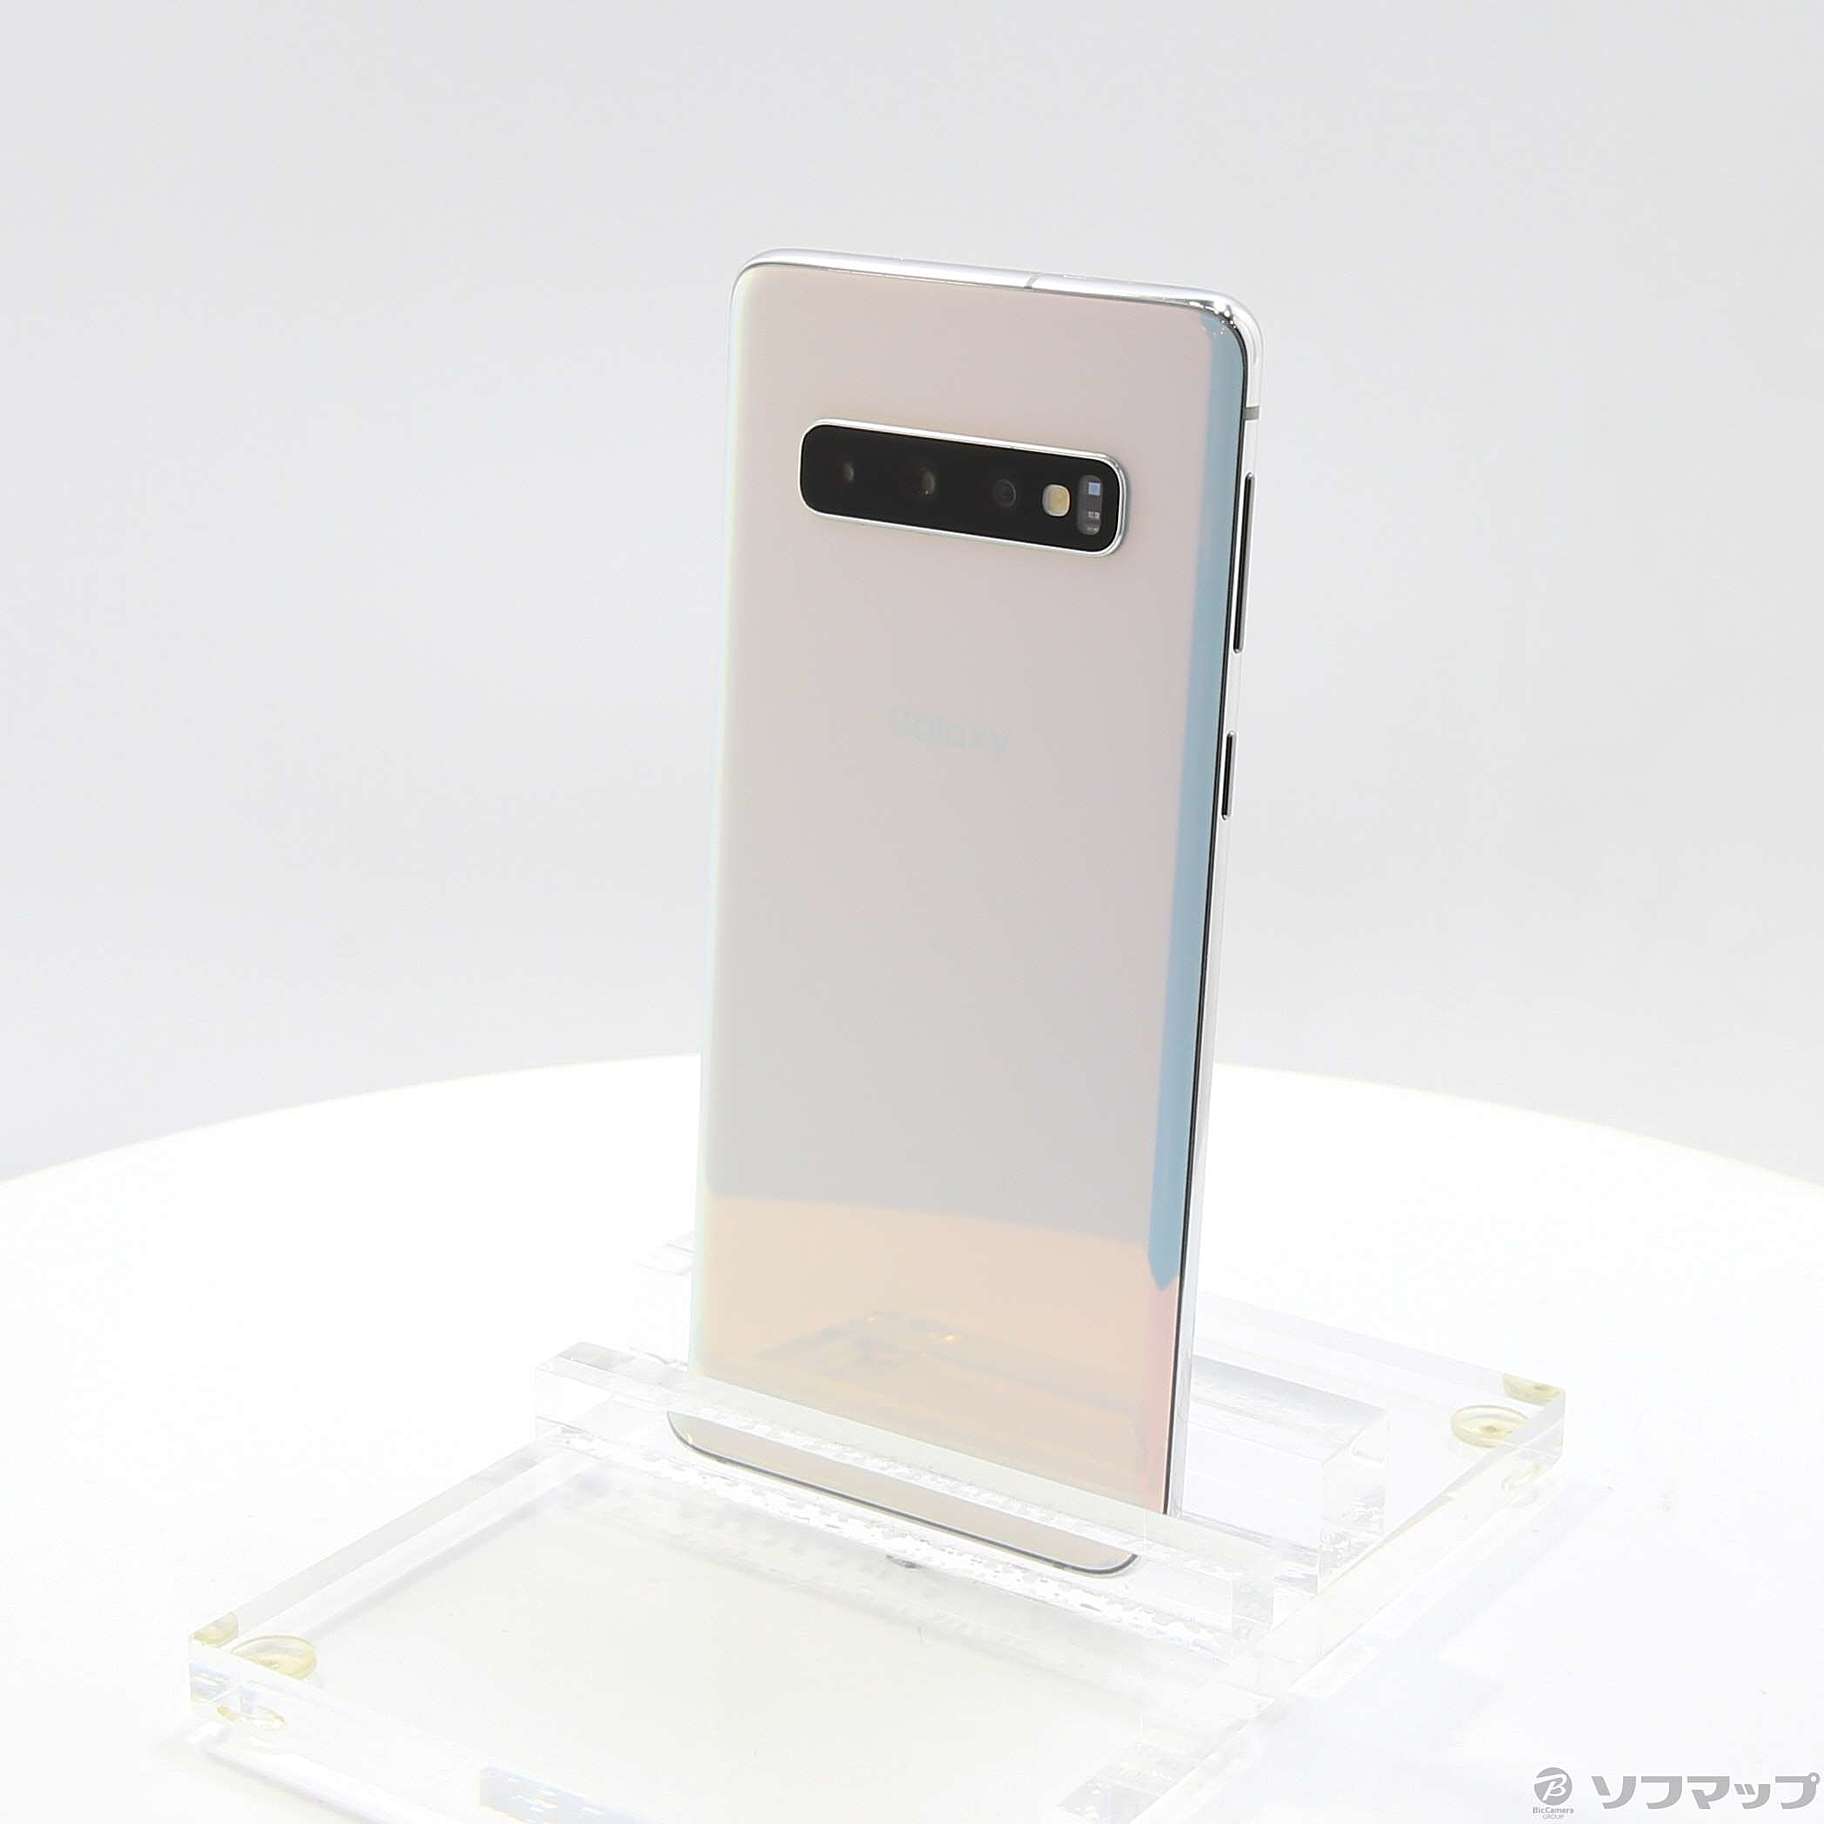 Galaxy S10＋ Prism White 128 GB au利用制限◯SIMフリーです